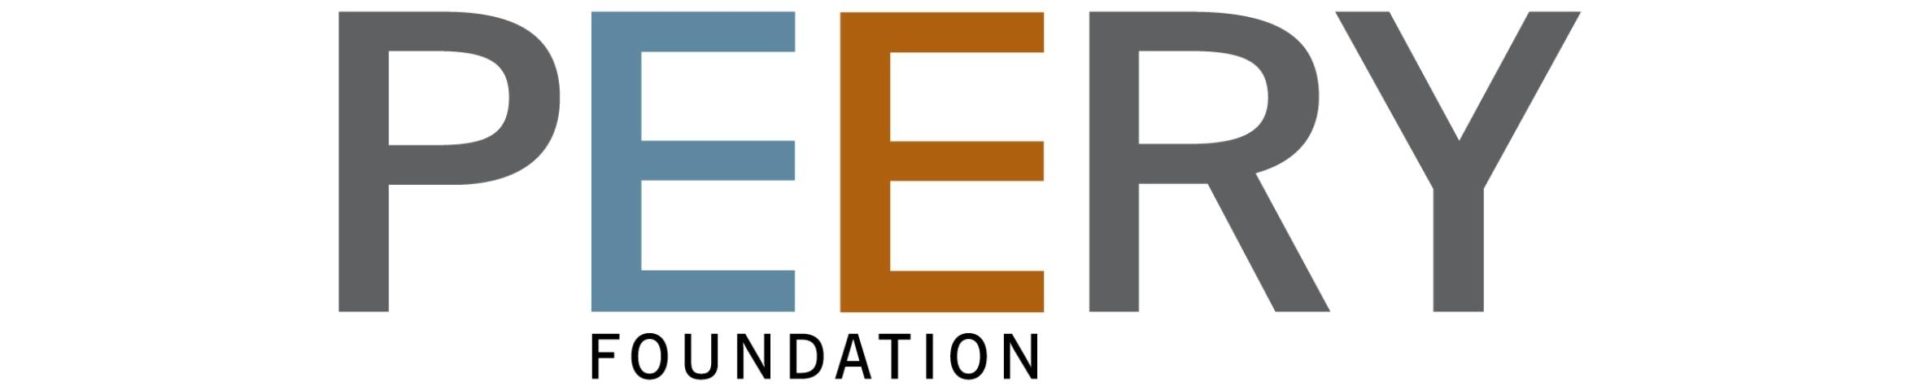 The Peery Foundation logo